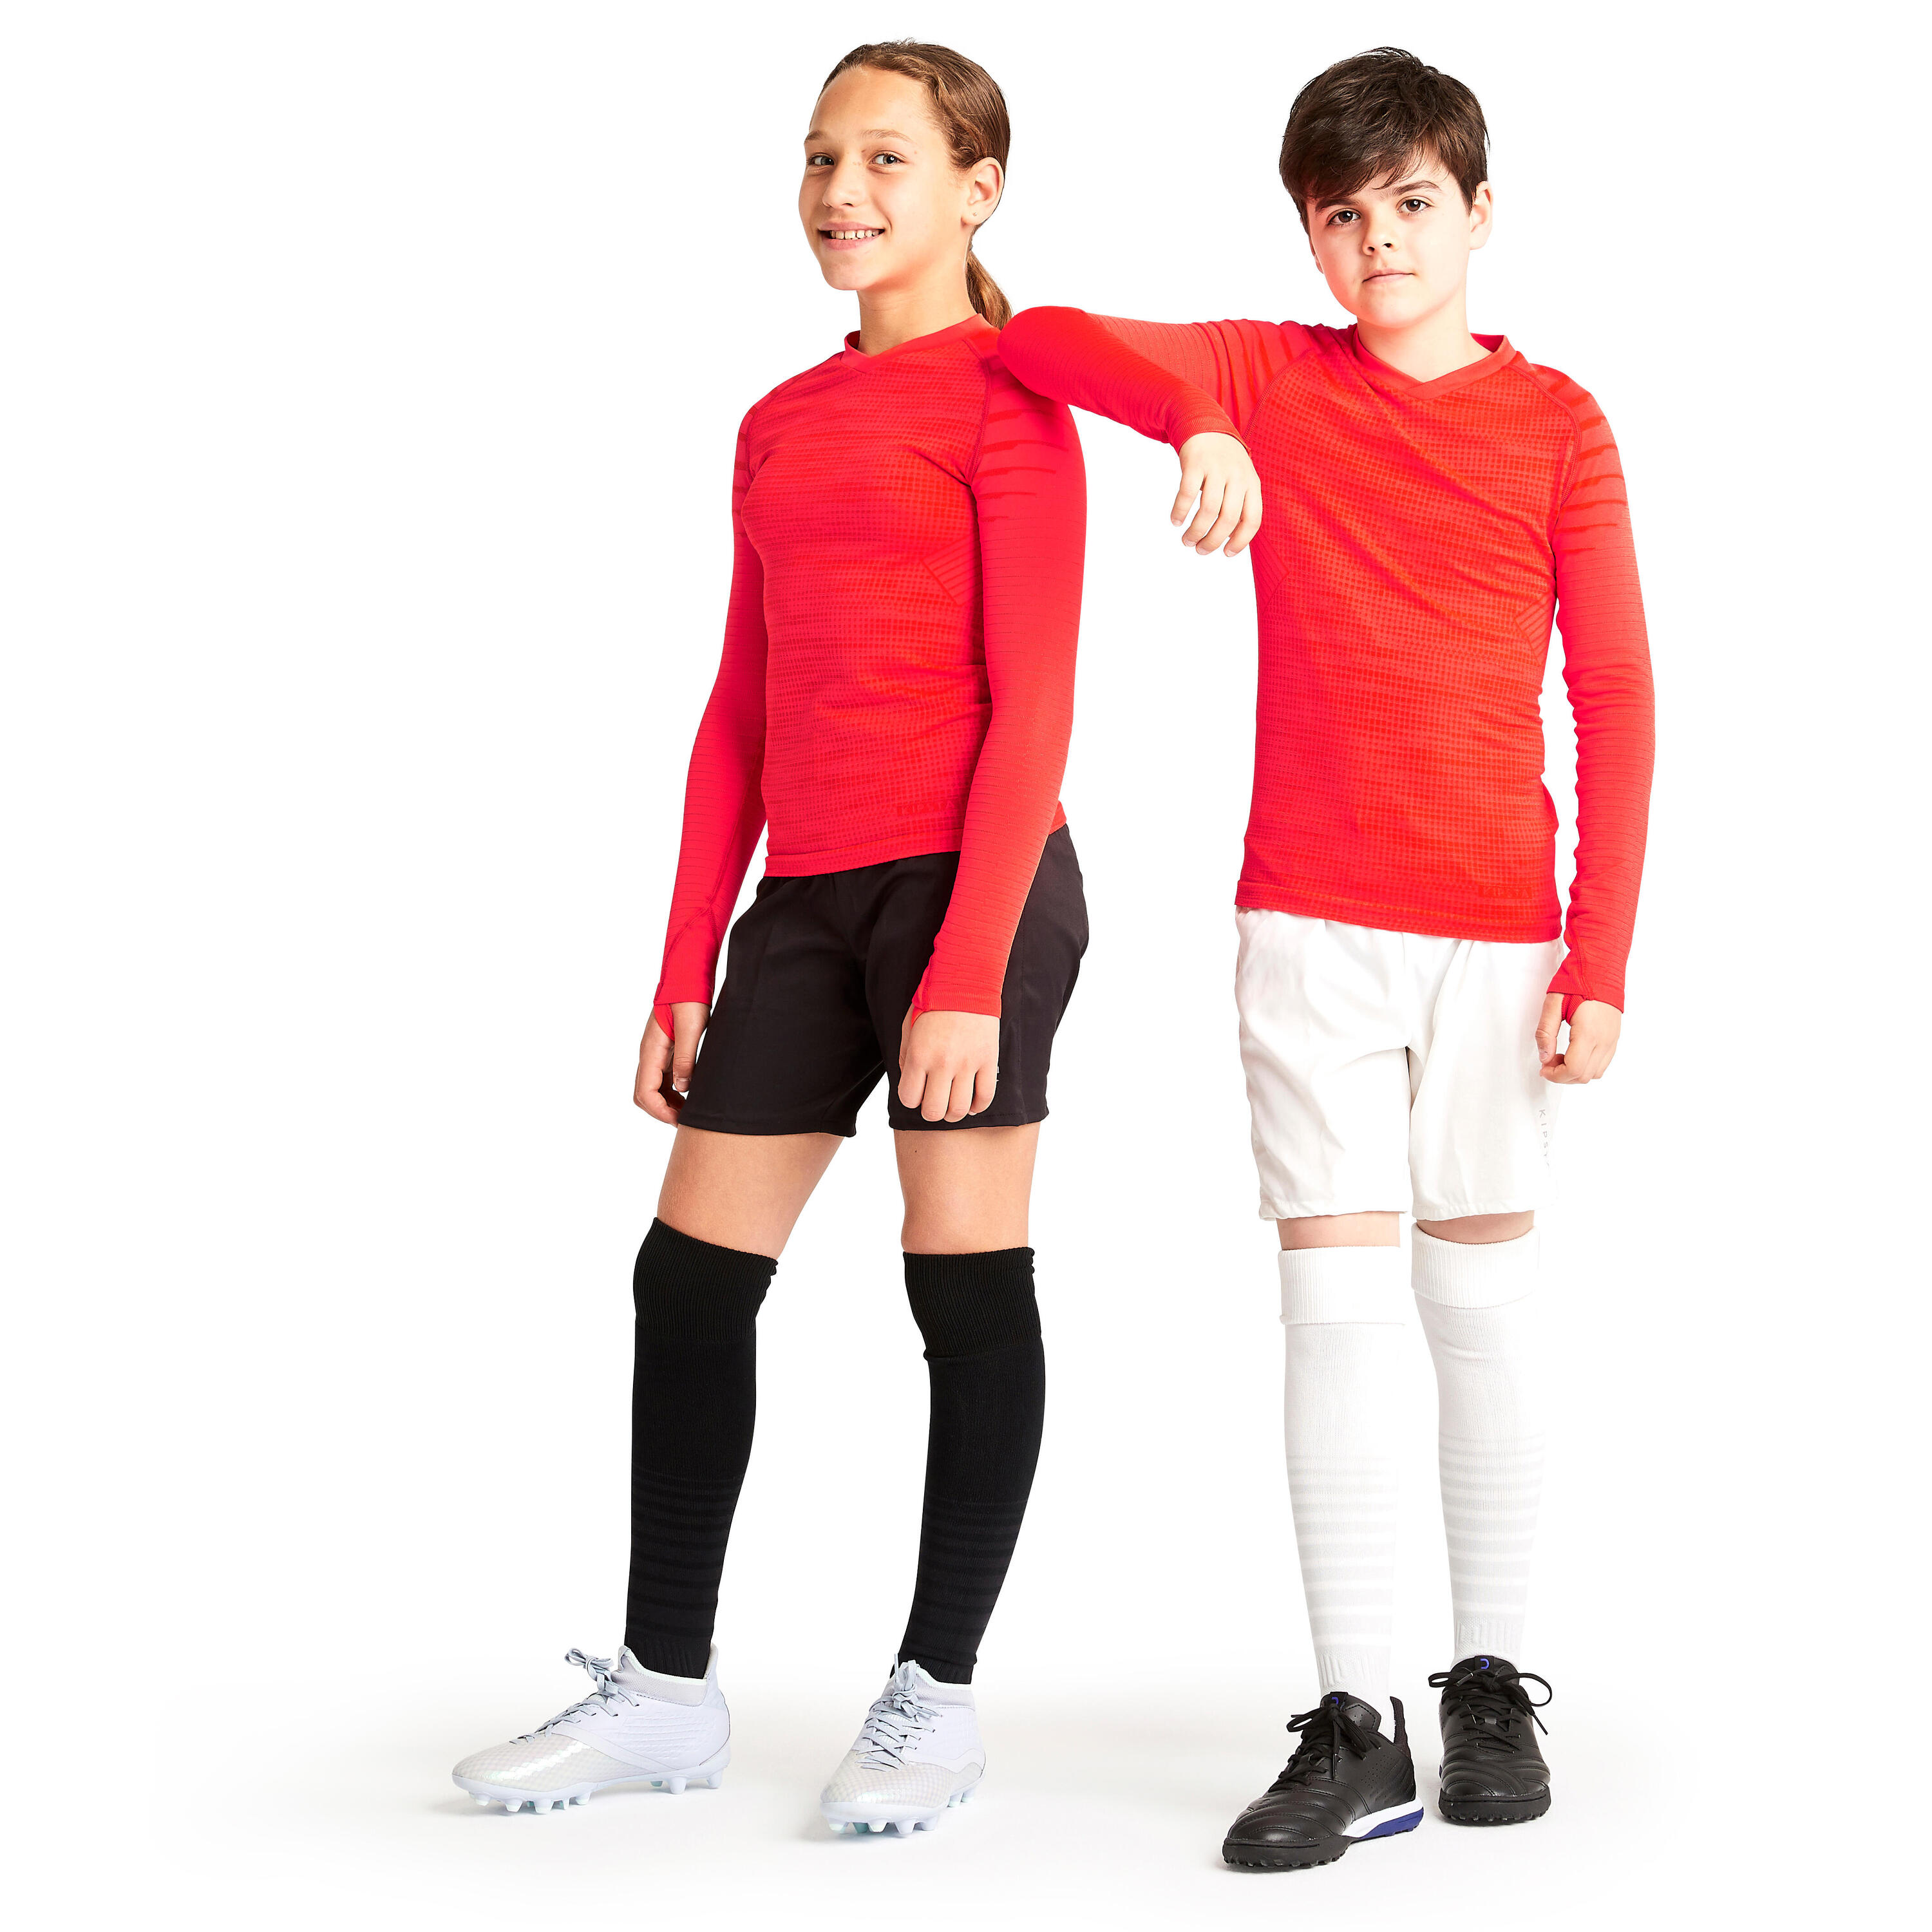 Kids' Long-Sleeved Thermal Base Layer Top Keepdry 500 - Orange 2/6